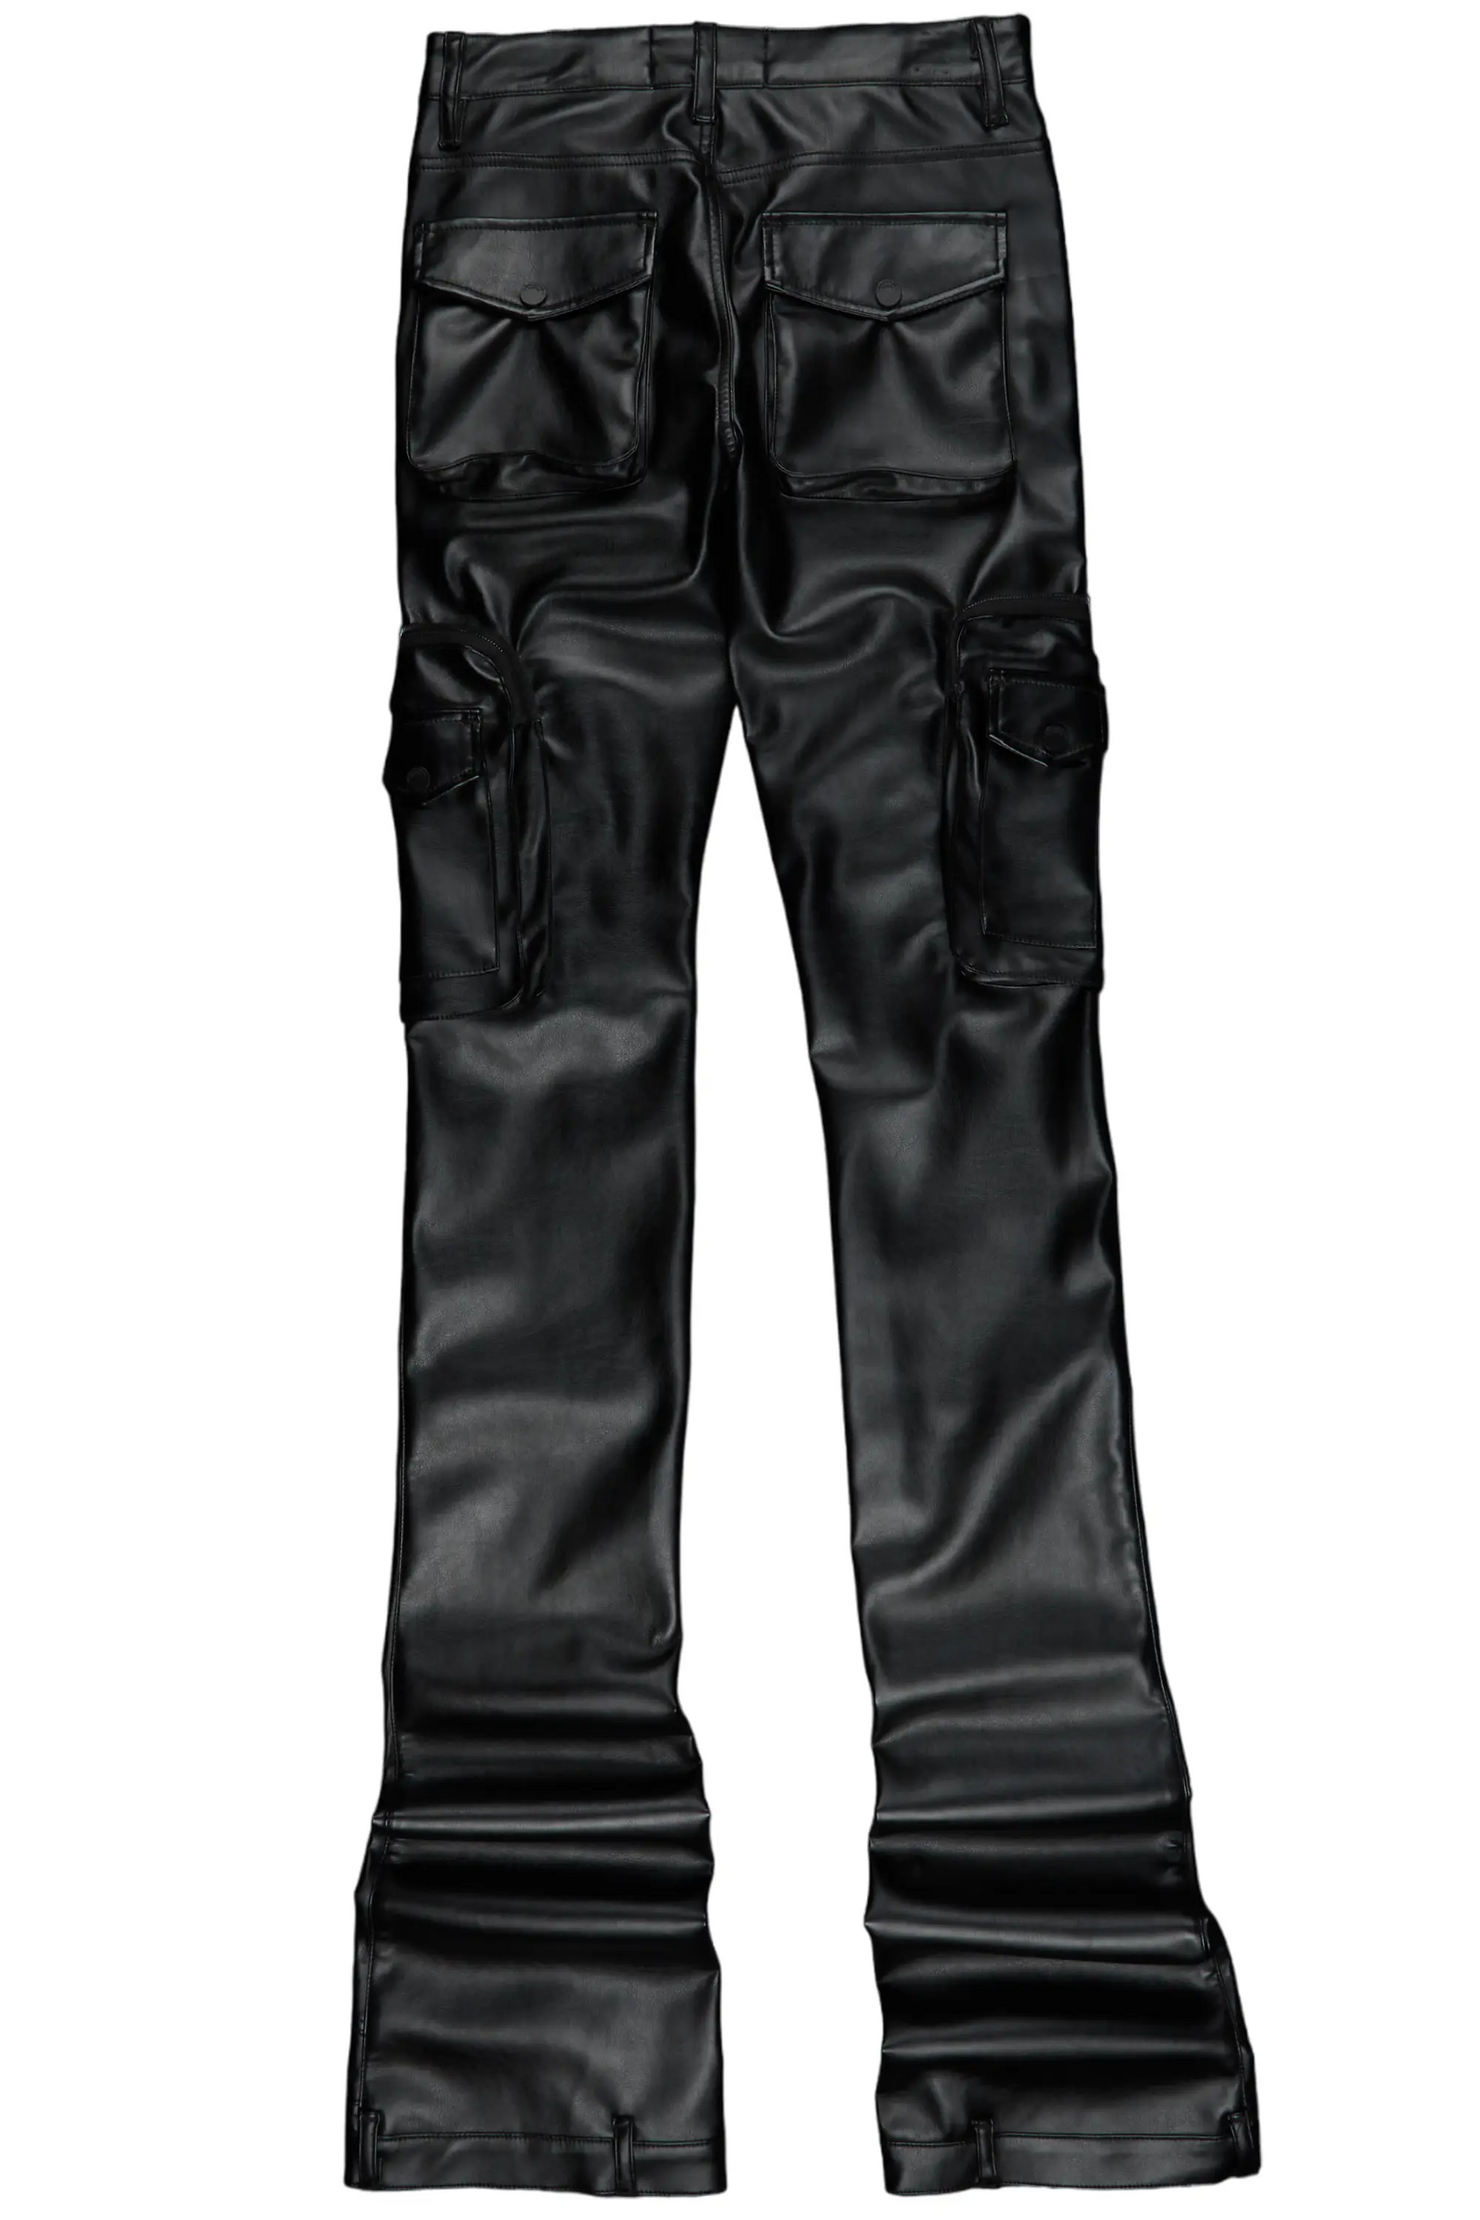 Mens Jean style Pants shown in Black Metallic (Faux Leather